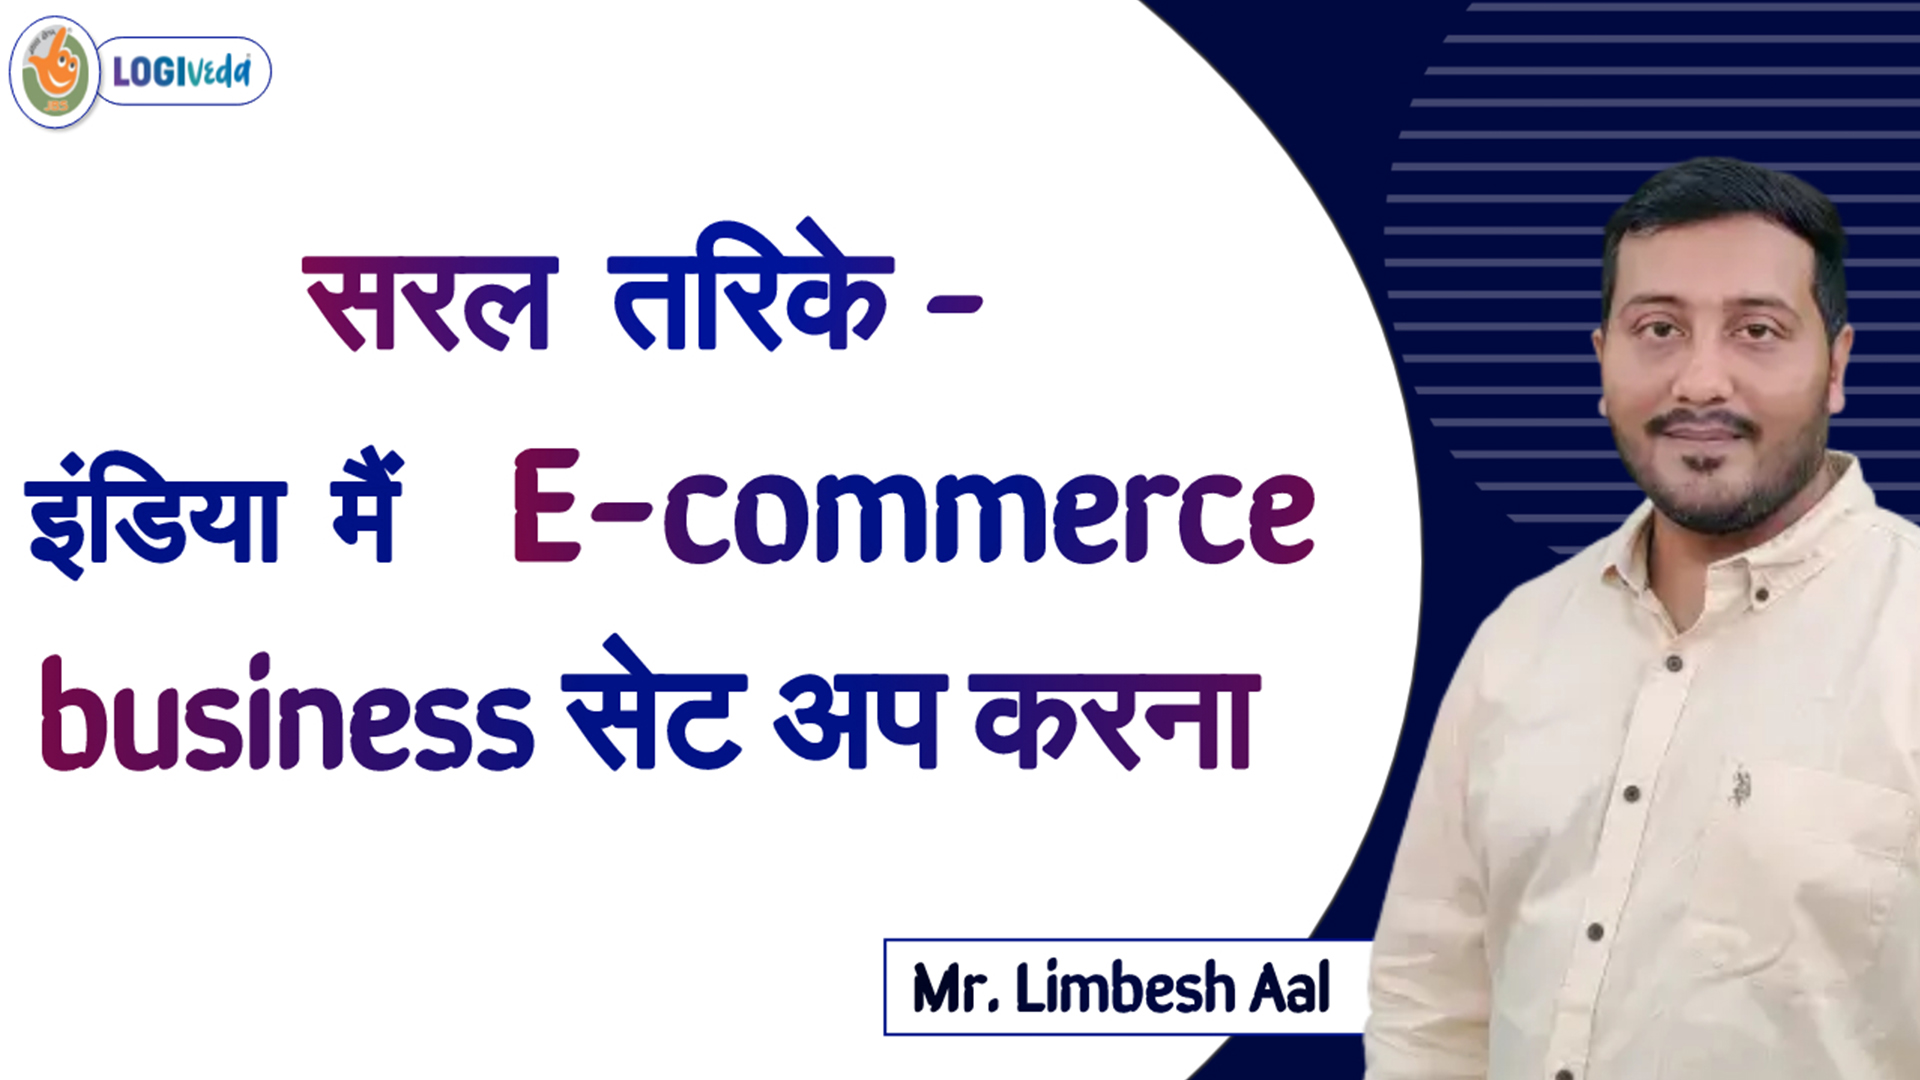 Saral tarike - India me E-commerce business setup karna | Mr. Limbesh Aal